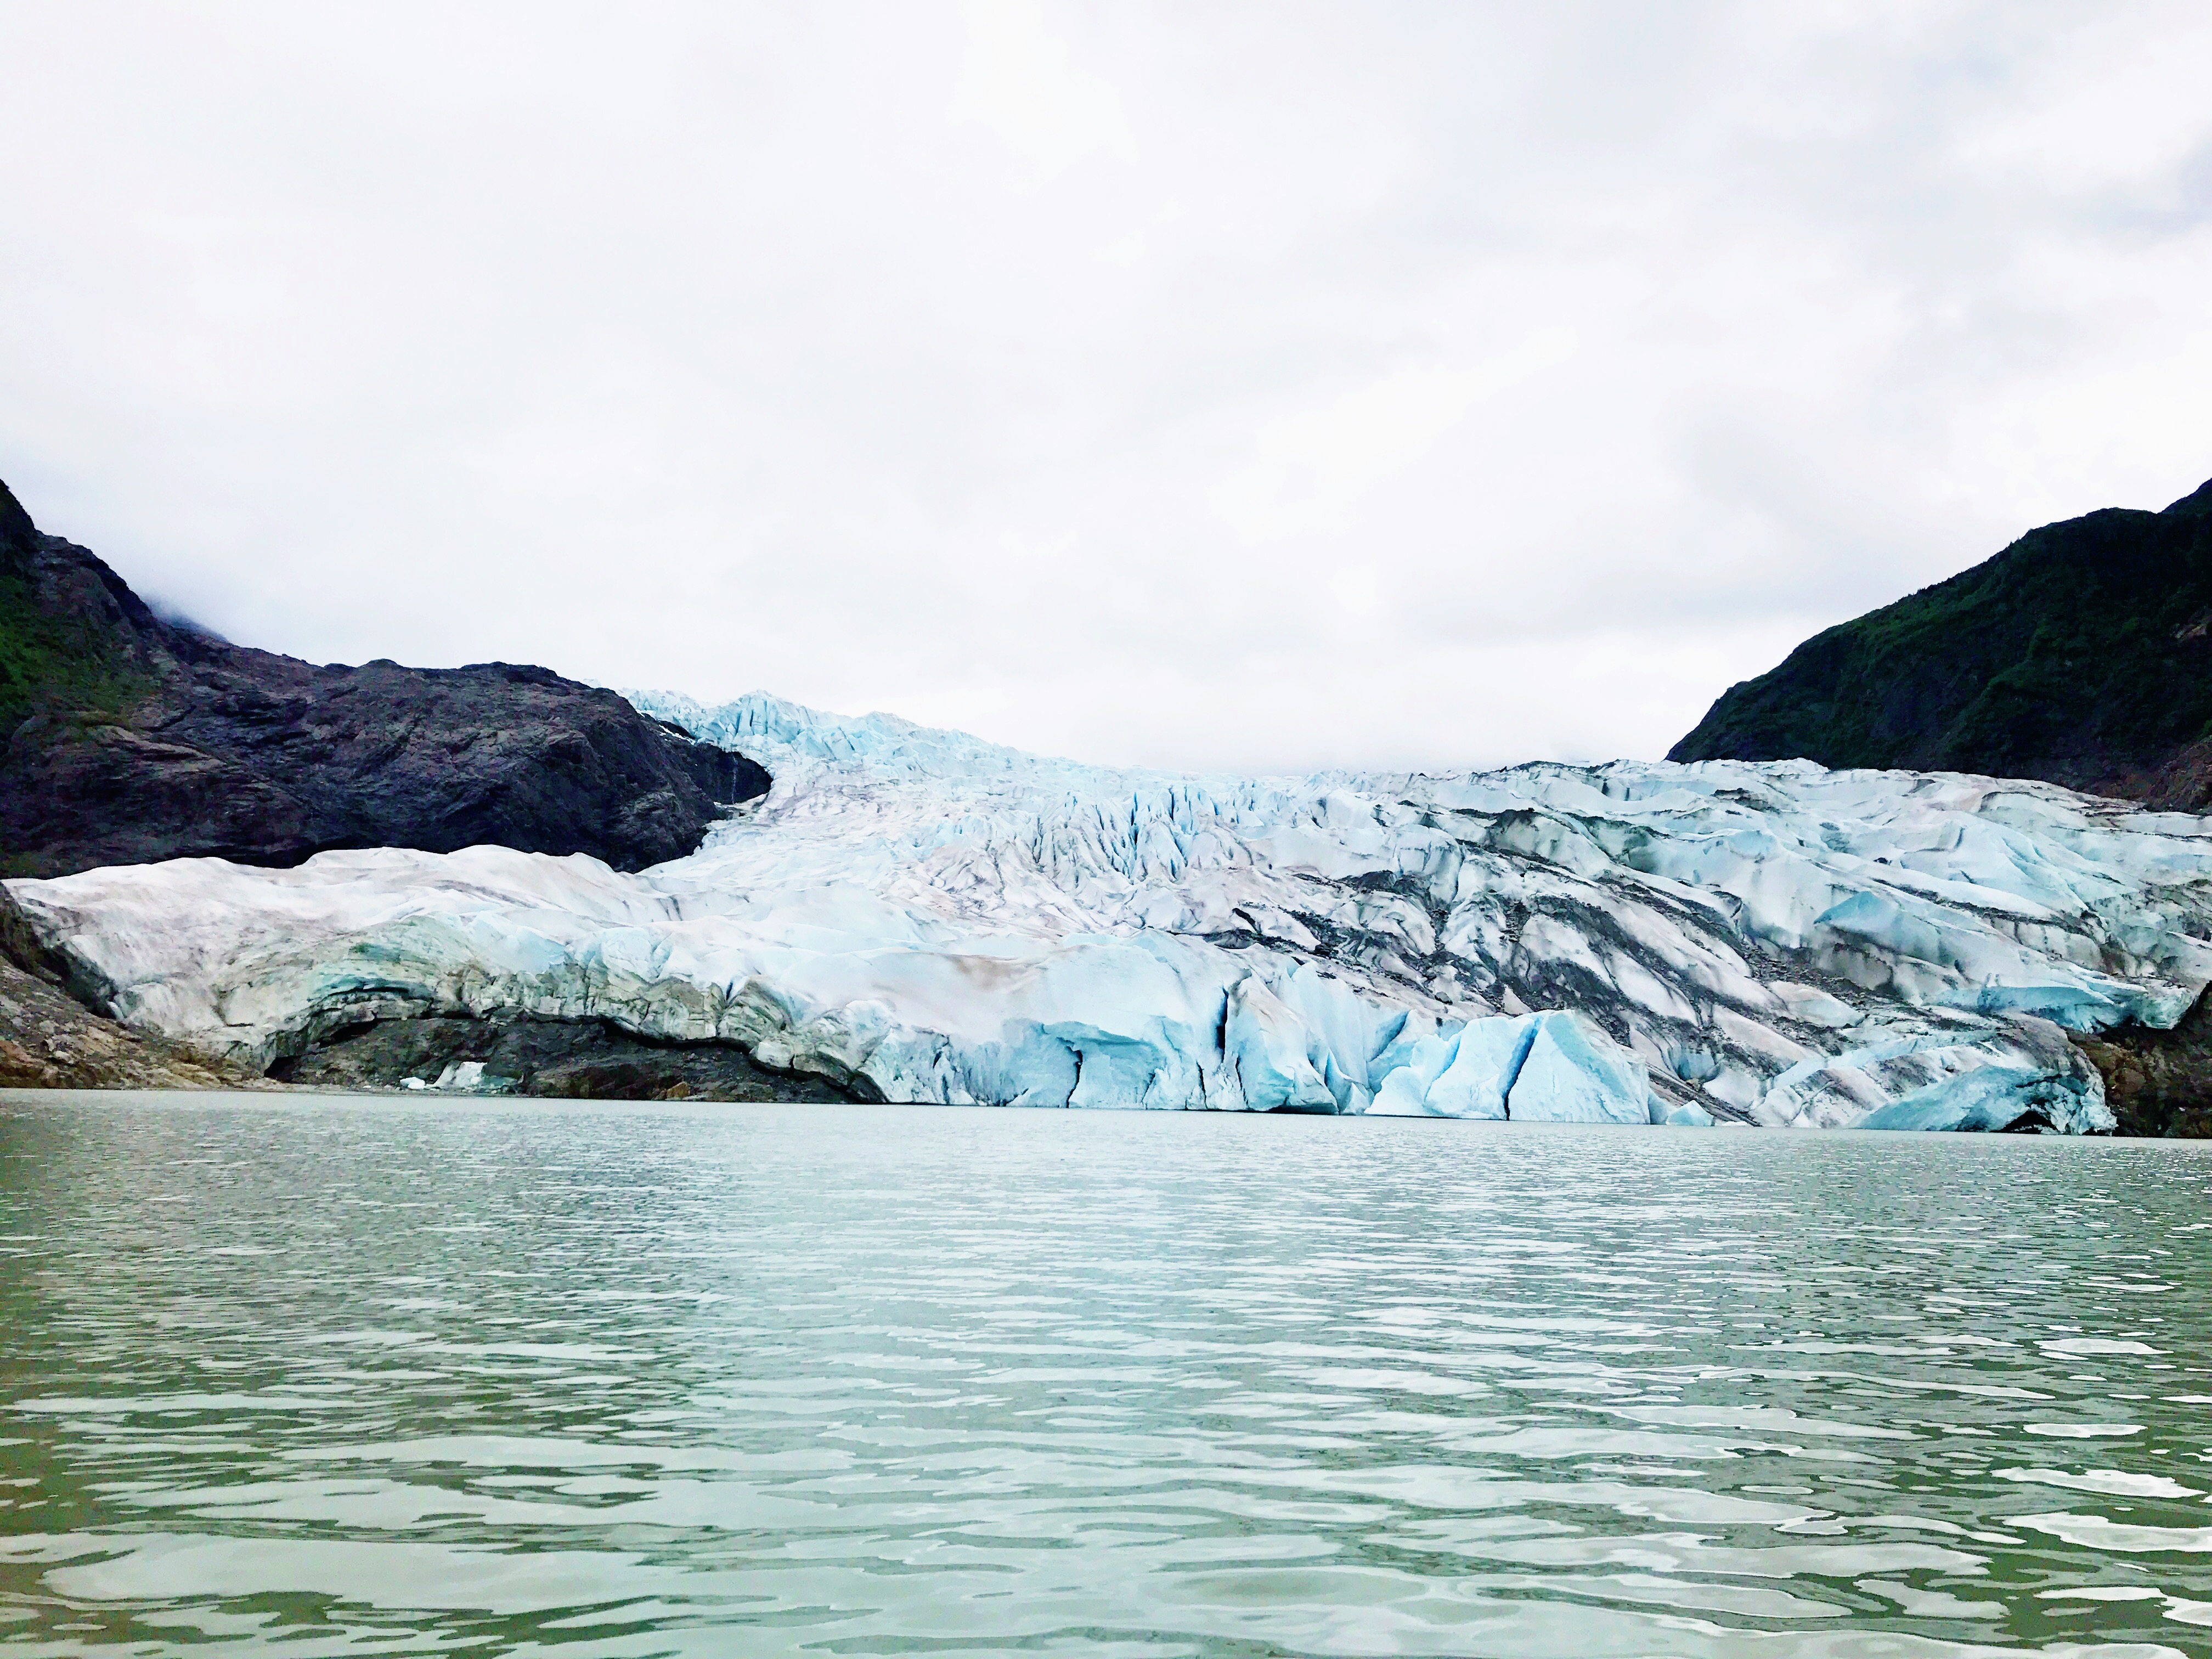 25 Photos To Inspire You To Take An Alaskan Cruise - Alaska Cruise - Cruise To Alaska - Alaska In Summer - Alaskan Wildlife - Alaska Glaciers - Communikait by Kait Hanson